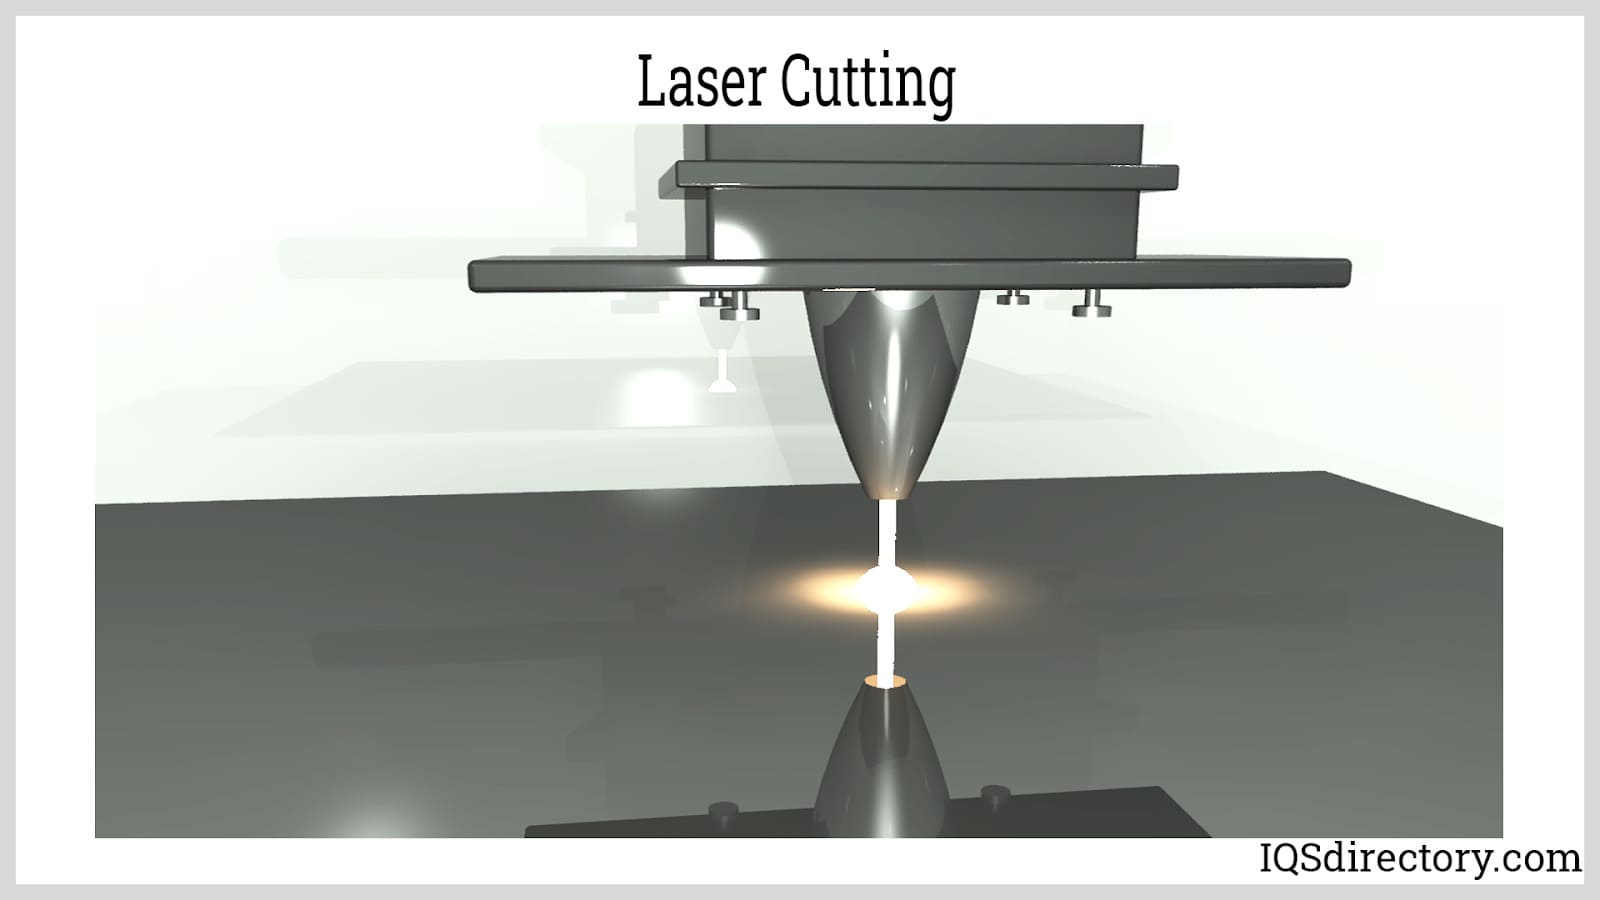 Laser Etch On Metal In 5 Steps